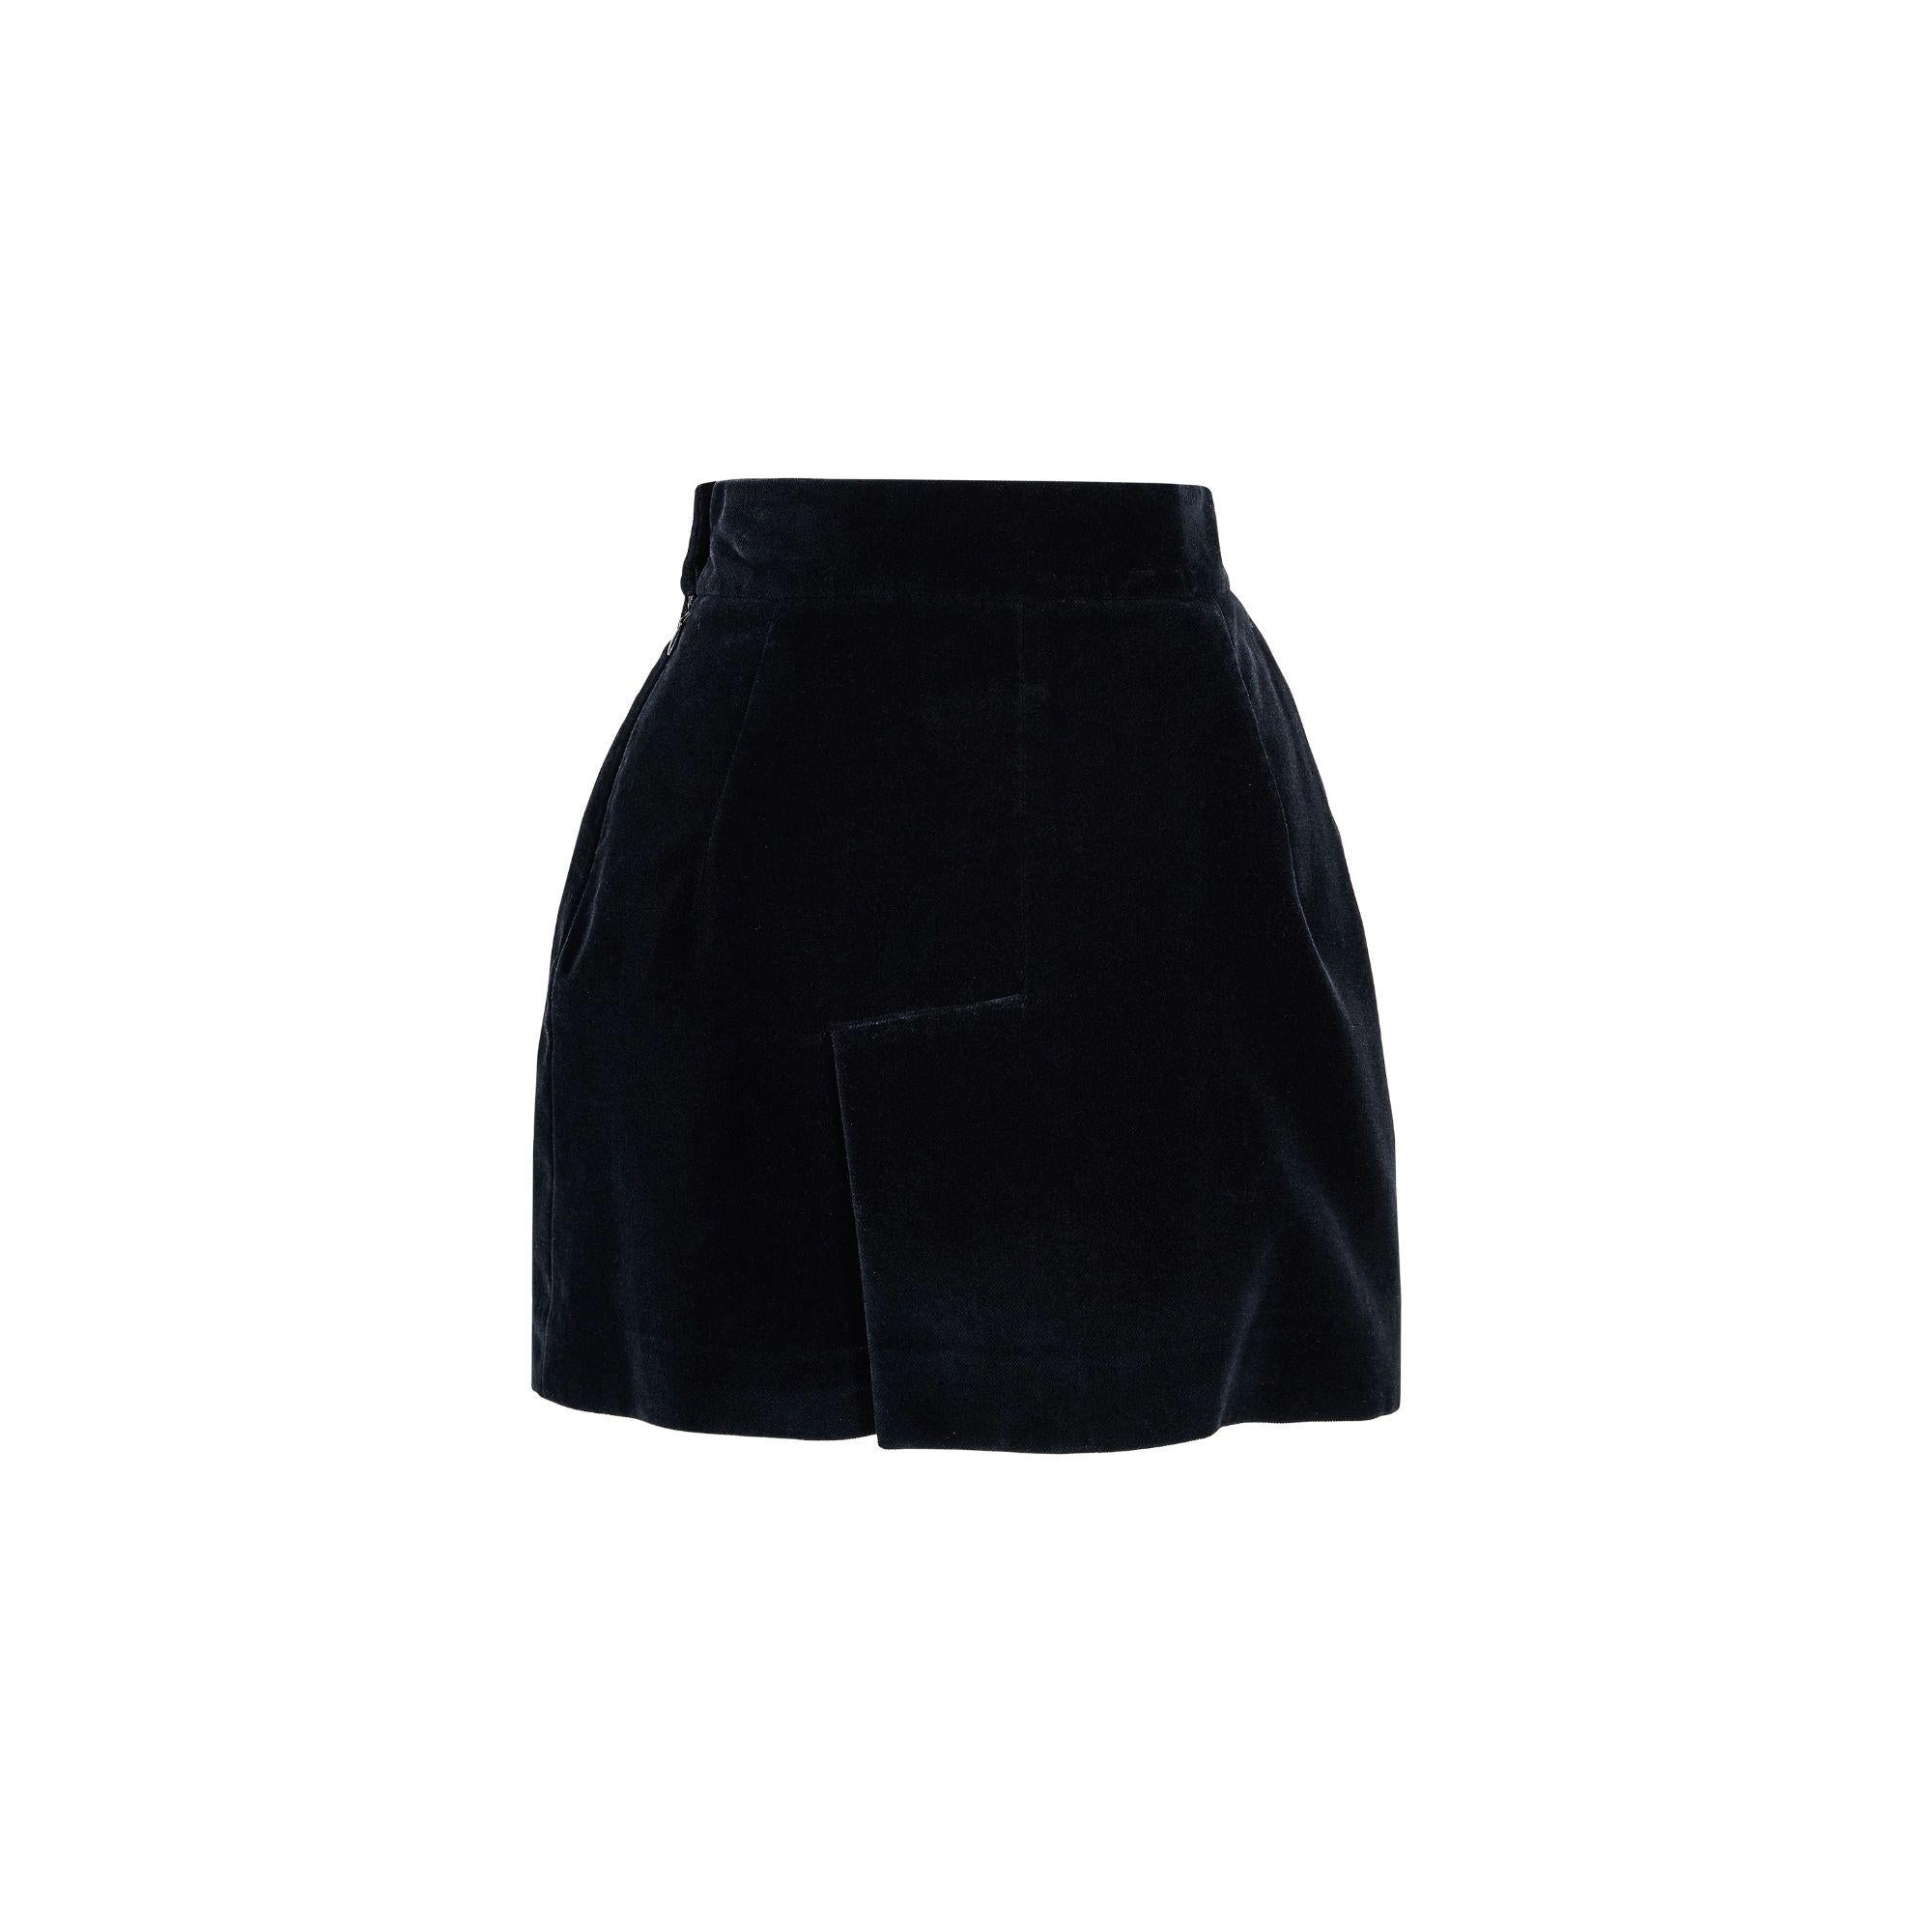 S/S 1995 Vivienne Westwood 'Erotic Zones' Collection Velvet Skirt 7